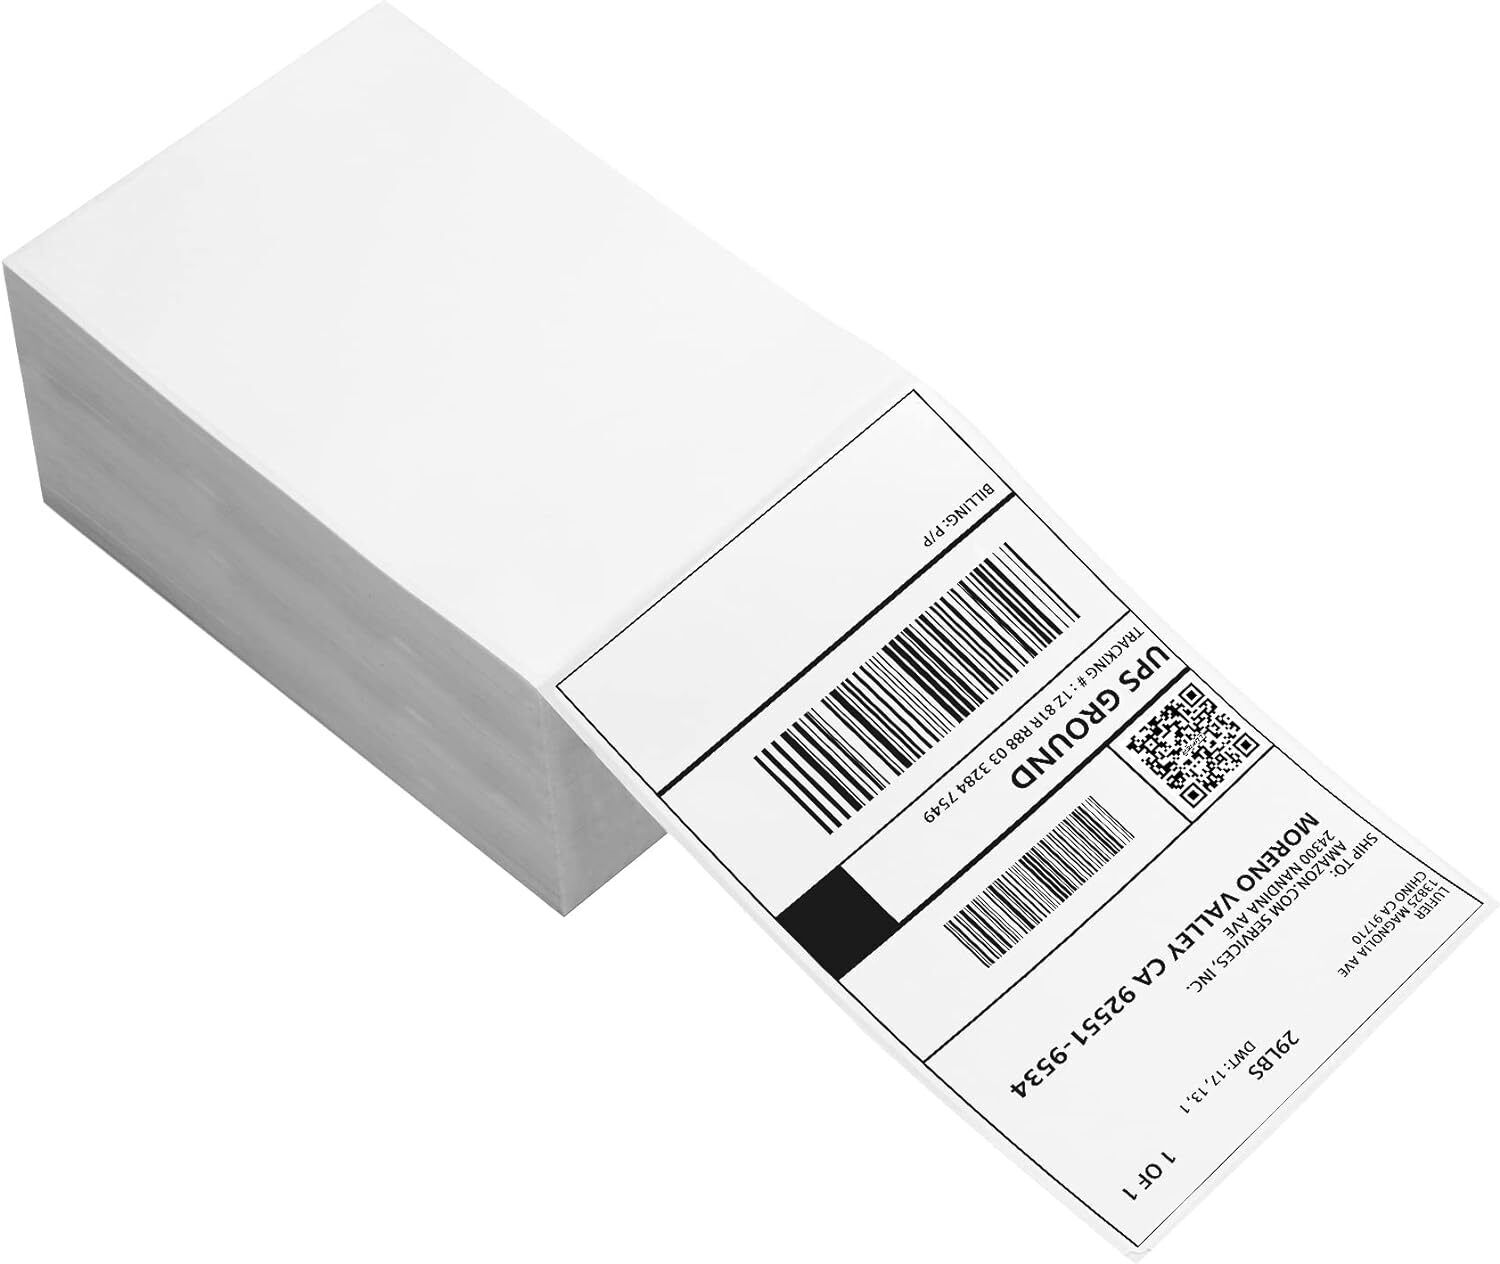 Phomemo 4x6 Shipping Label Printer Thermal Barcode Desktop Printer+500 Label lot